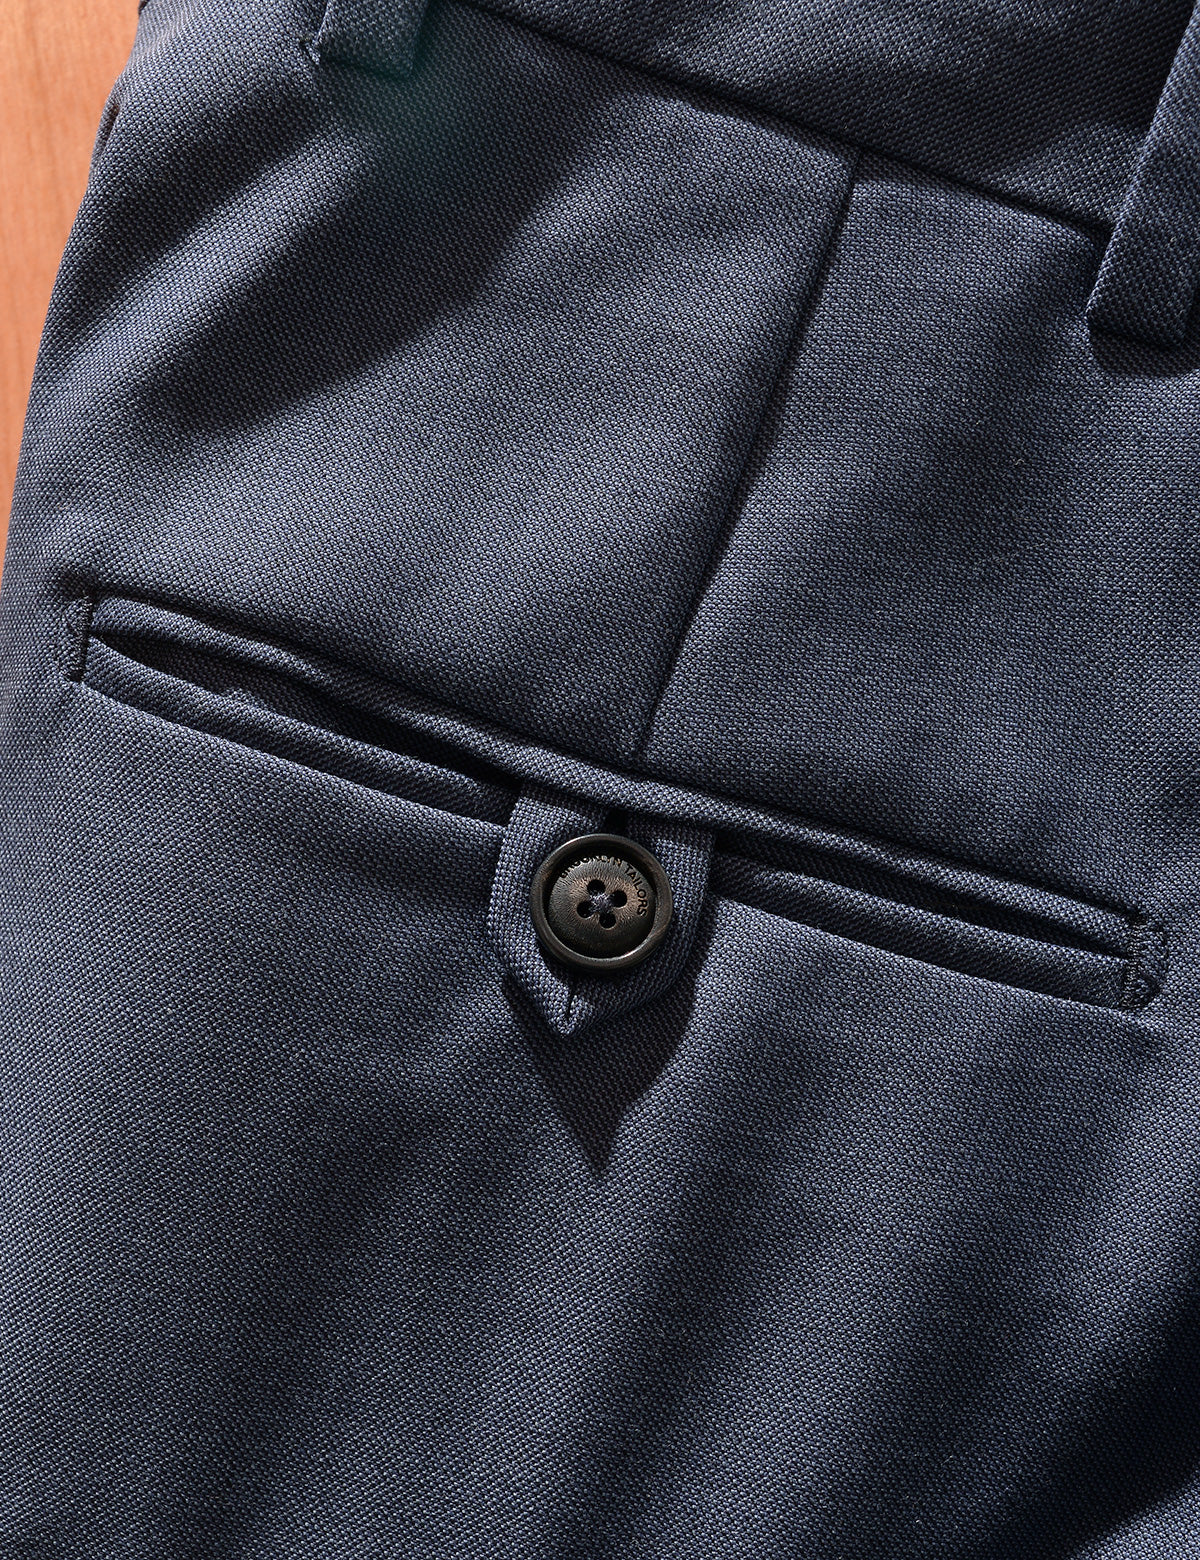 Close up of BKT50 Tailored Trousers in Wool Sharkskin - Haze Blue  showing back pocket